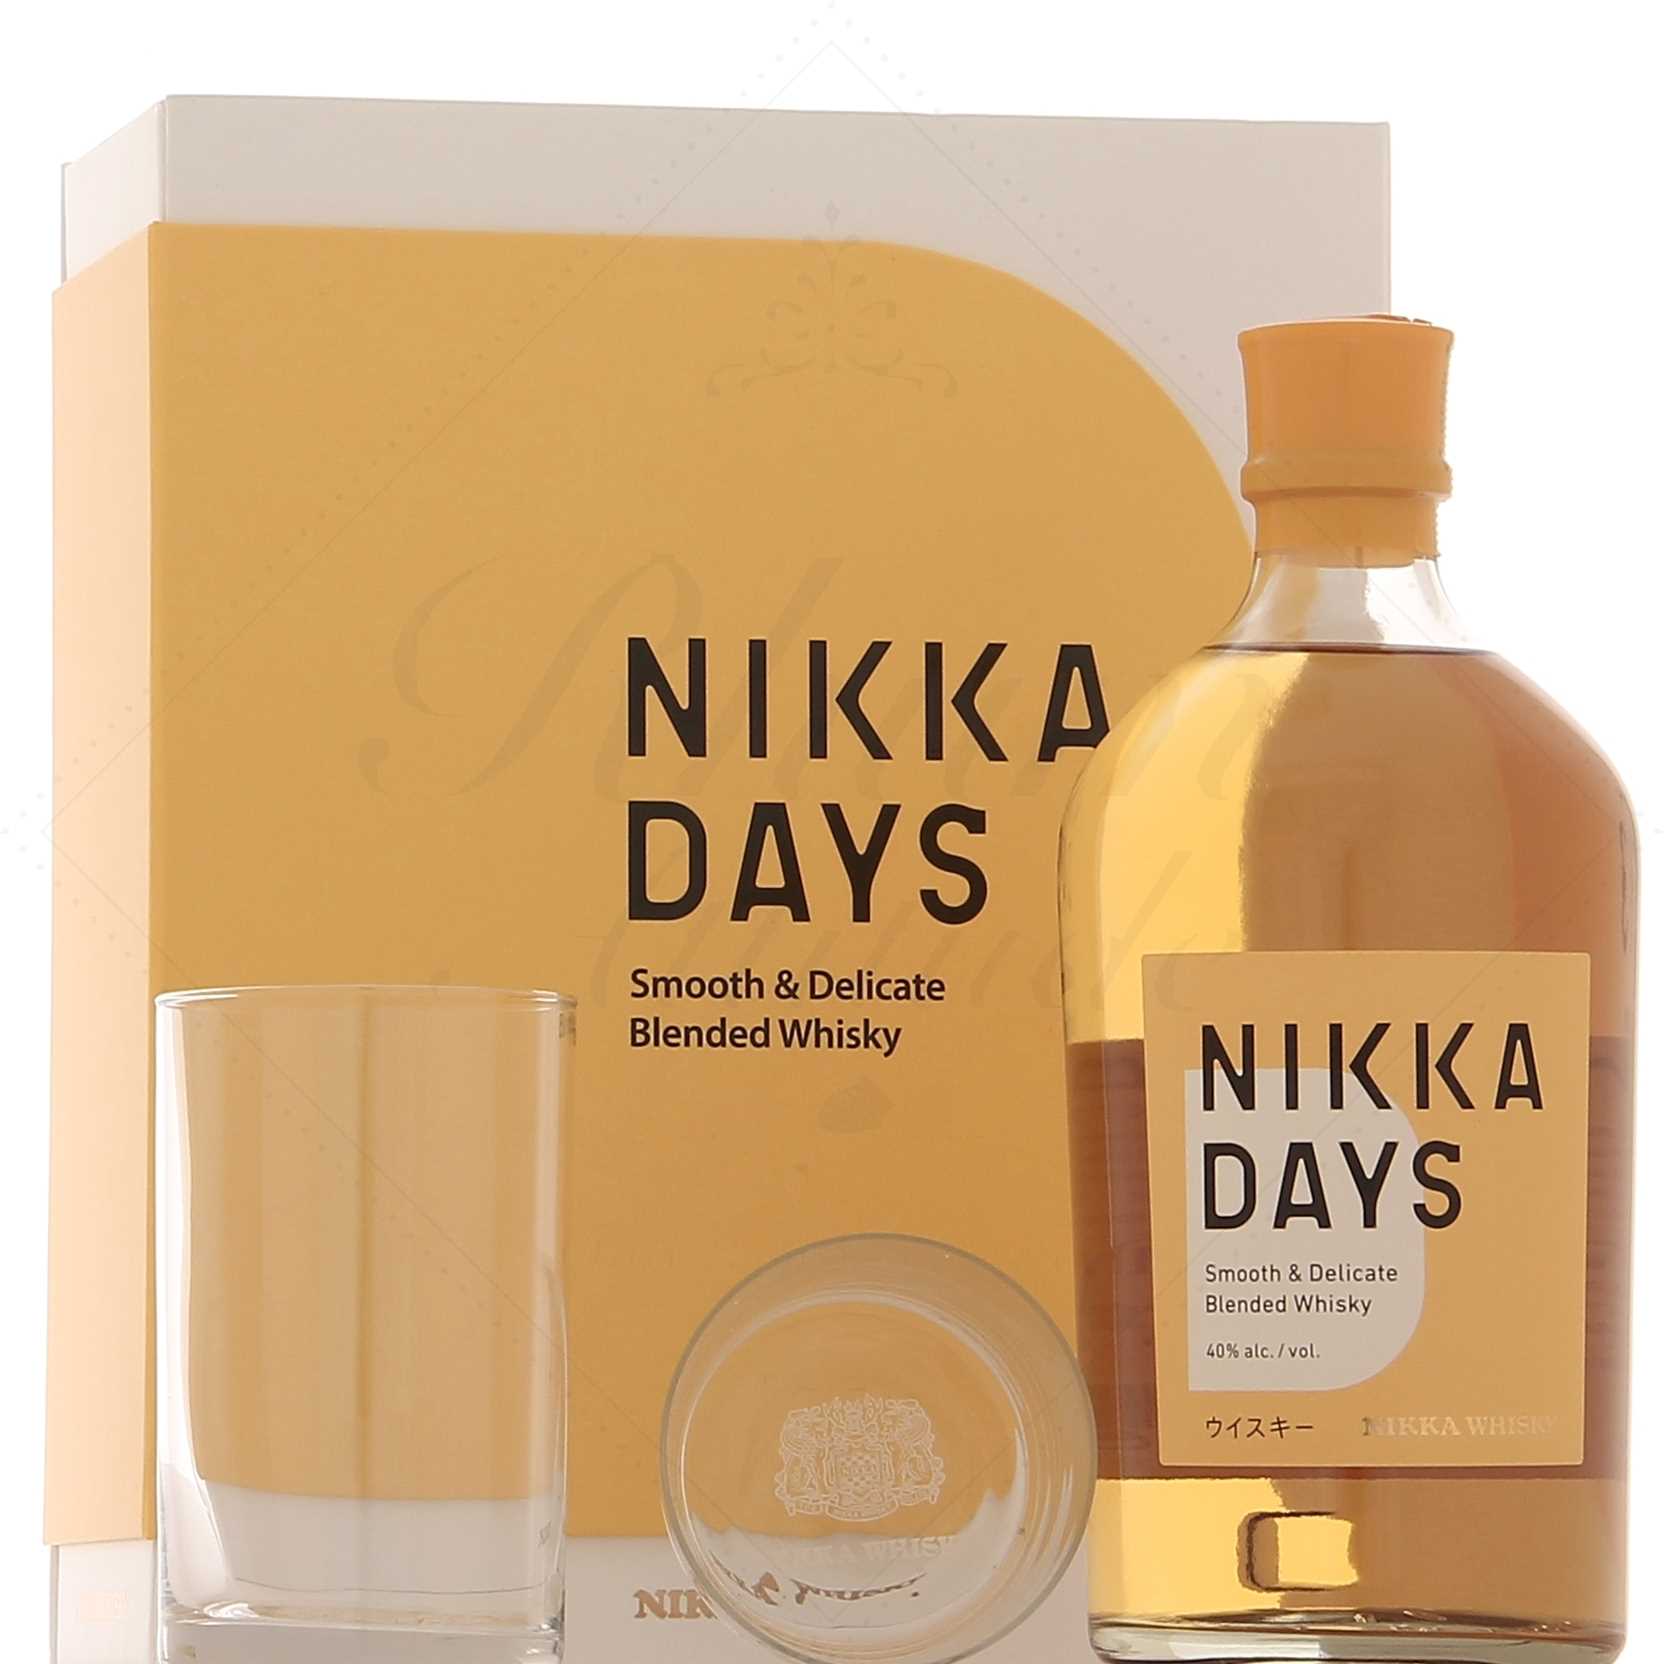 Coffret whisky Nikka Days avec 2 verres